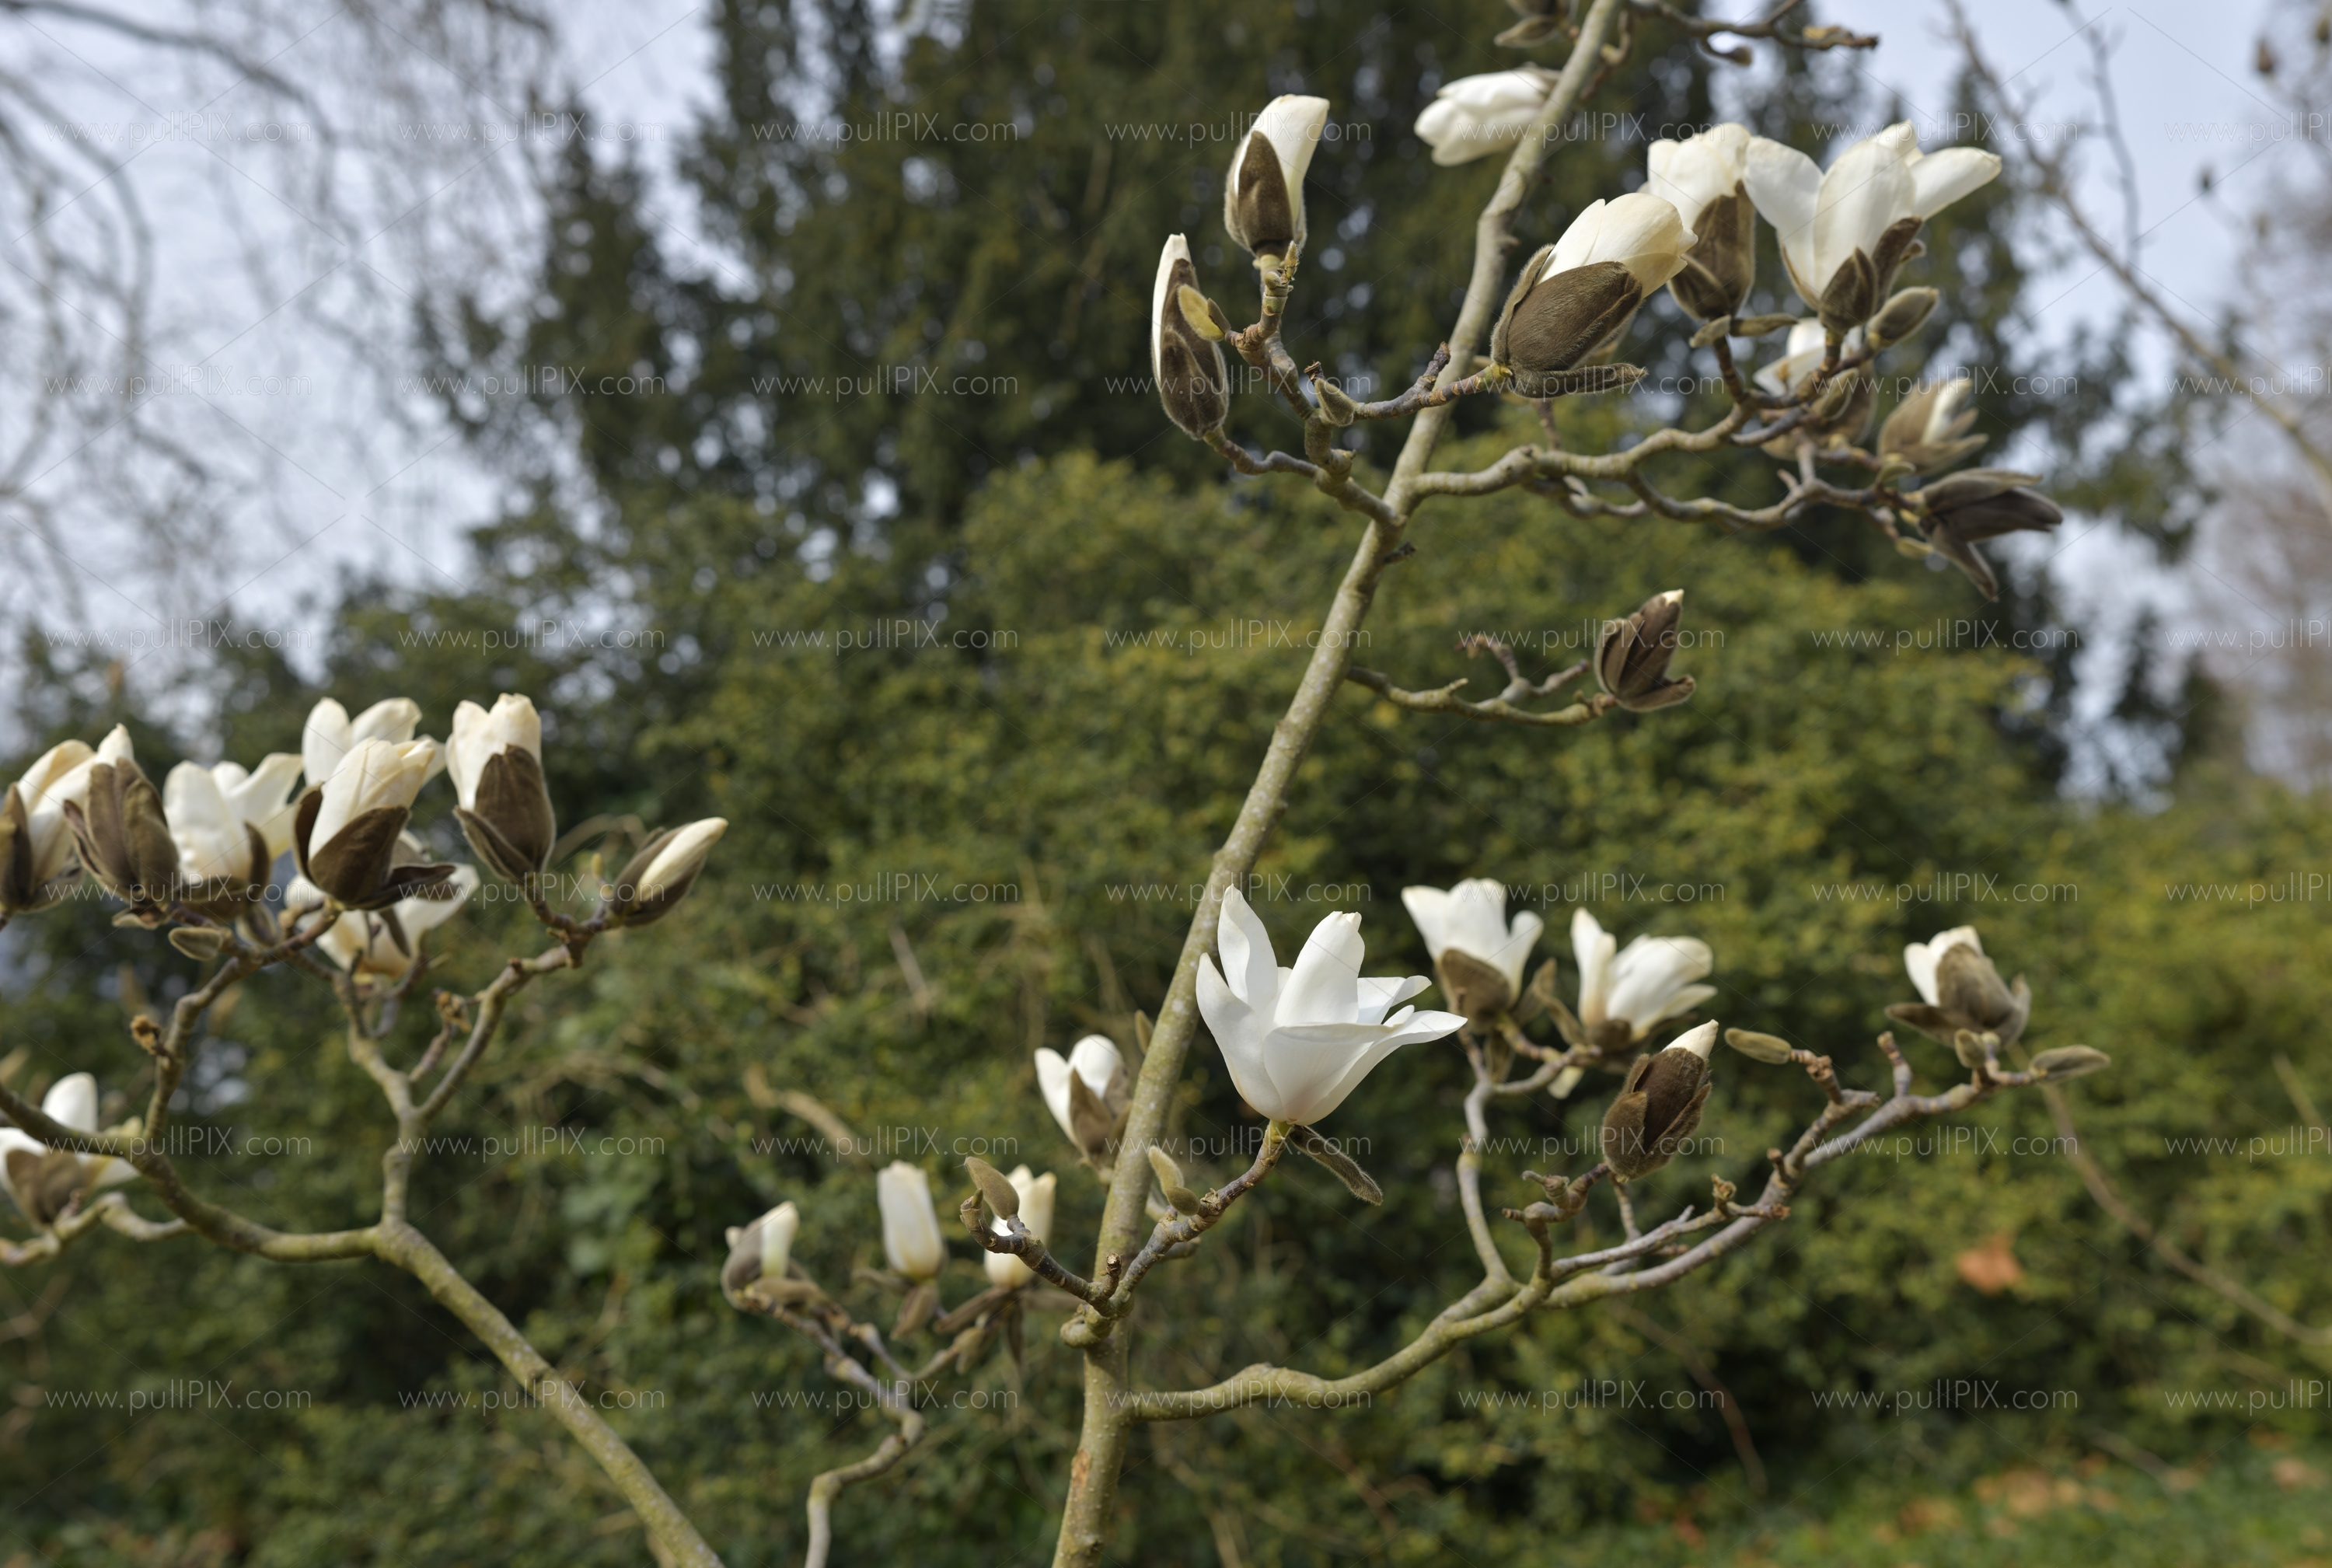 Preview weisse magnolien.jpg